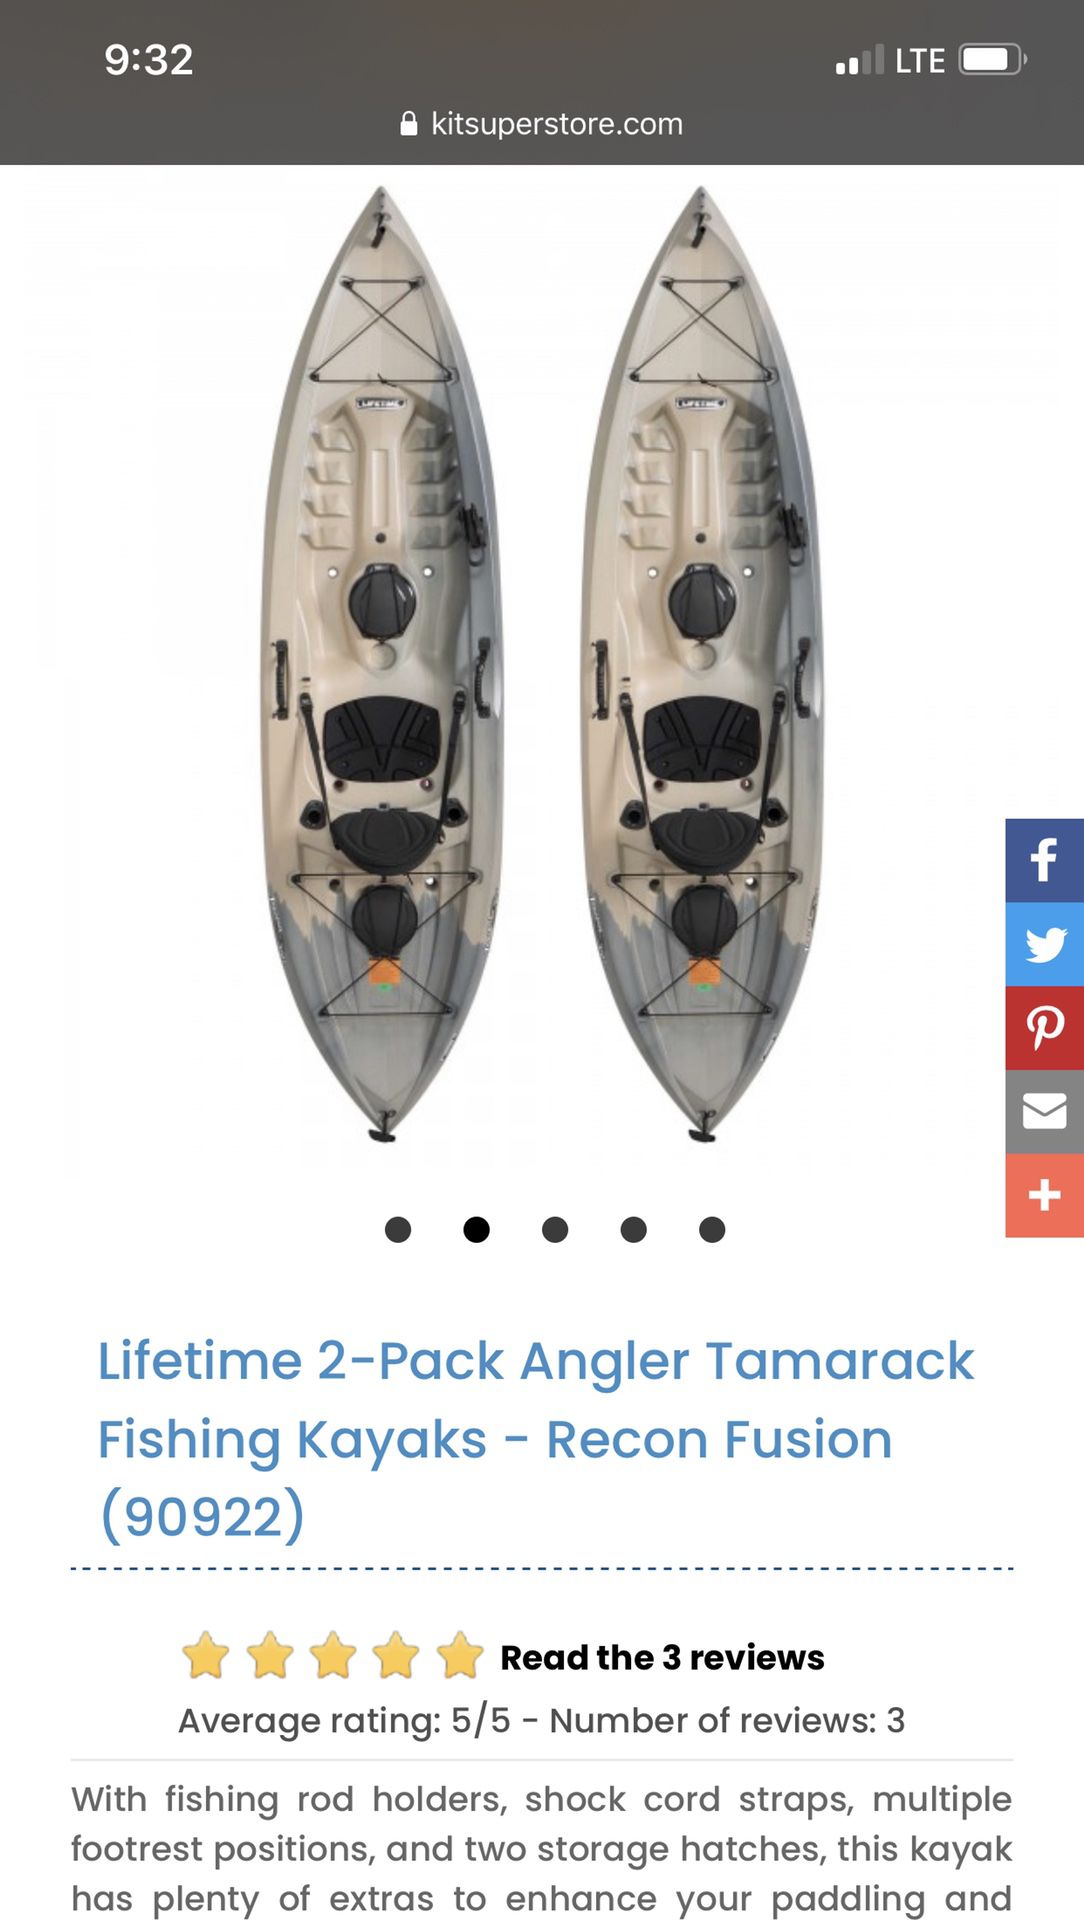 Two brand new fishing Kayaks